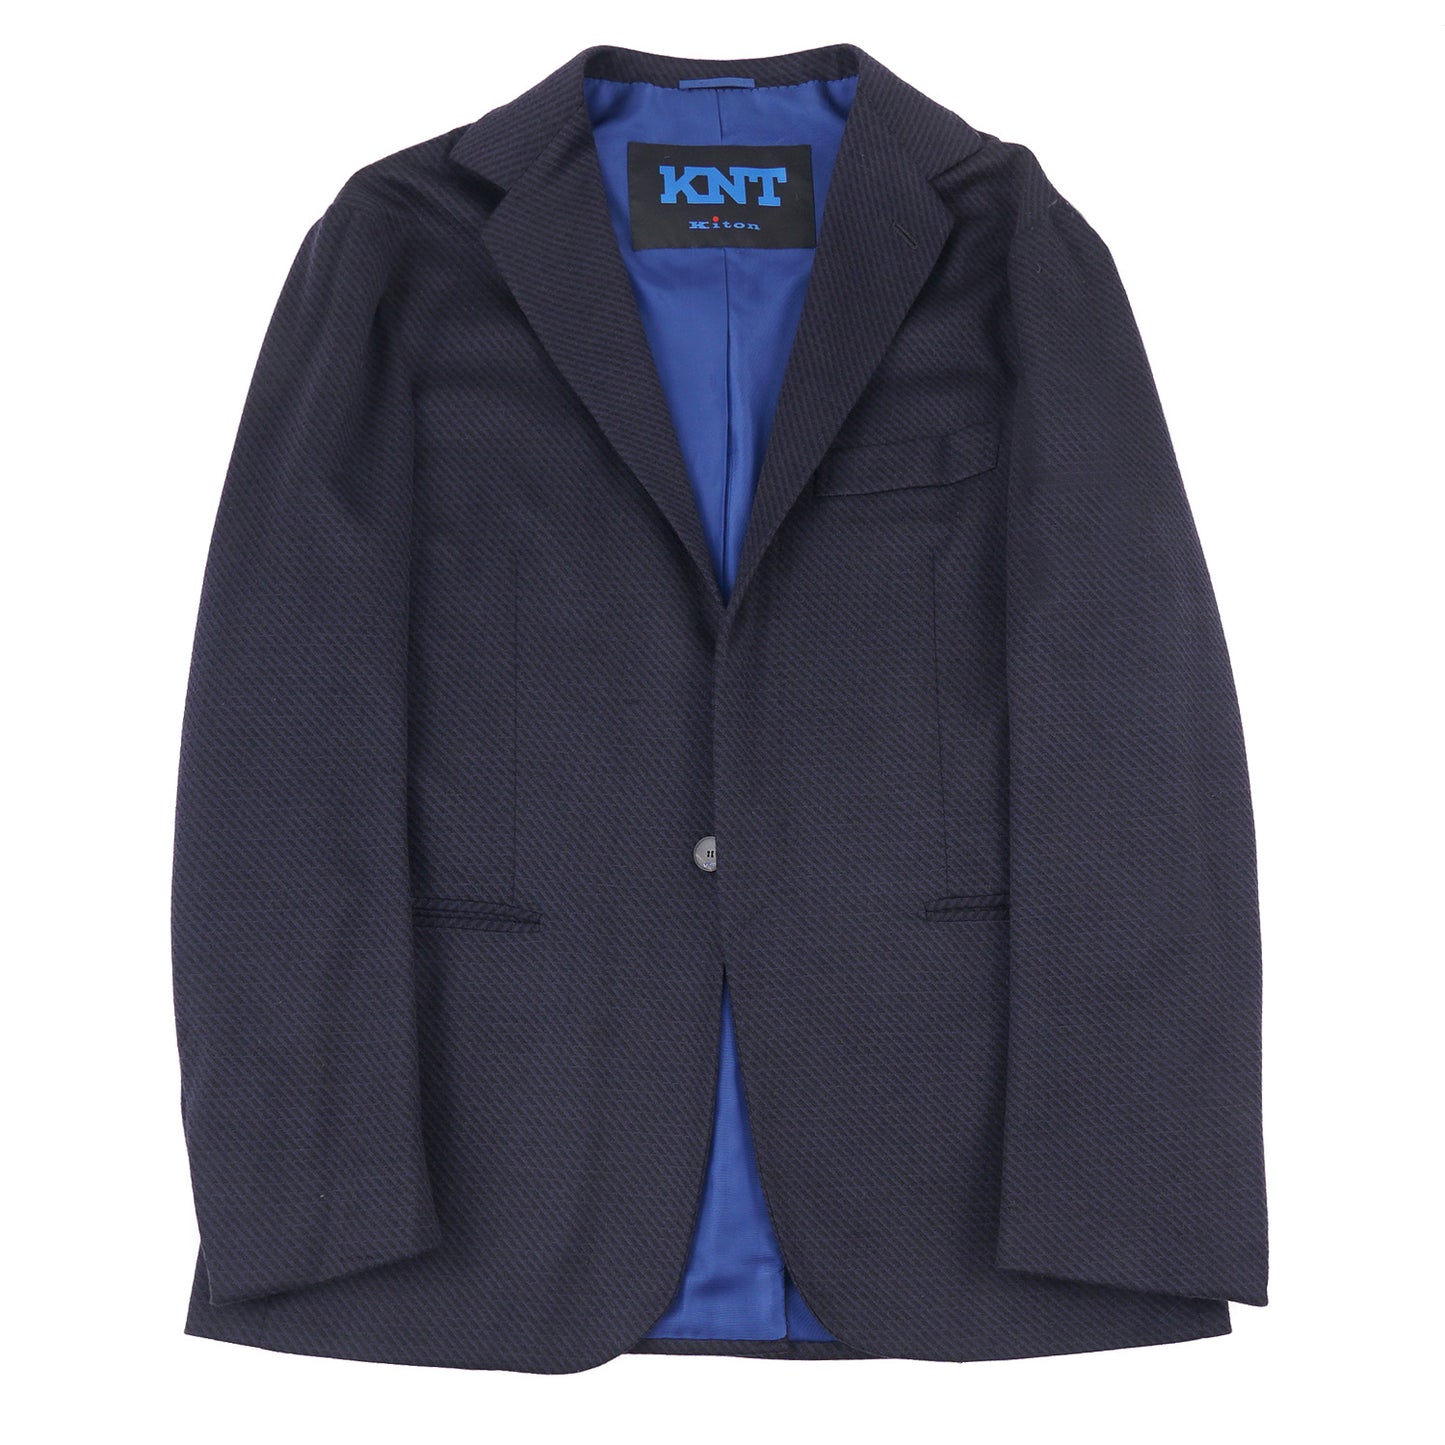 Kiton KNT Jersey Cashmere Sport Coat - Top Shelf Apparel